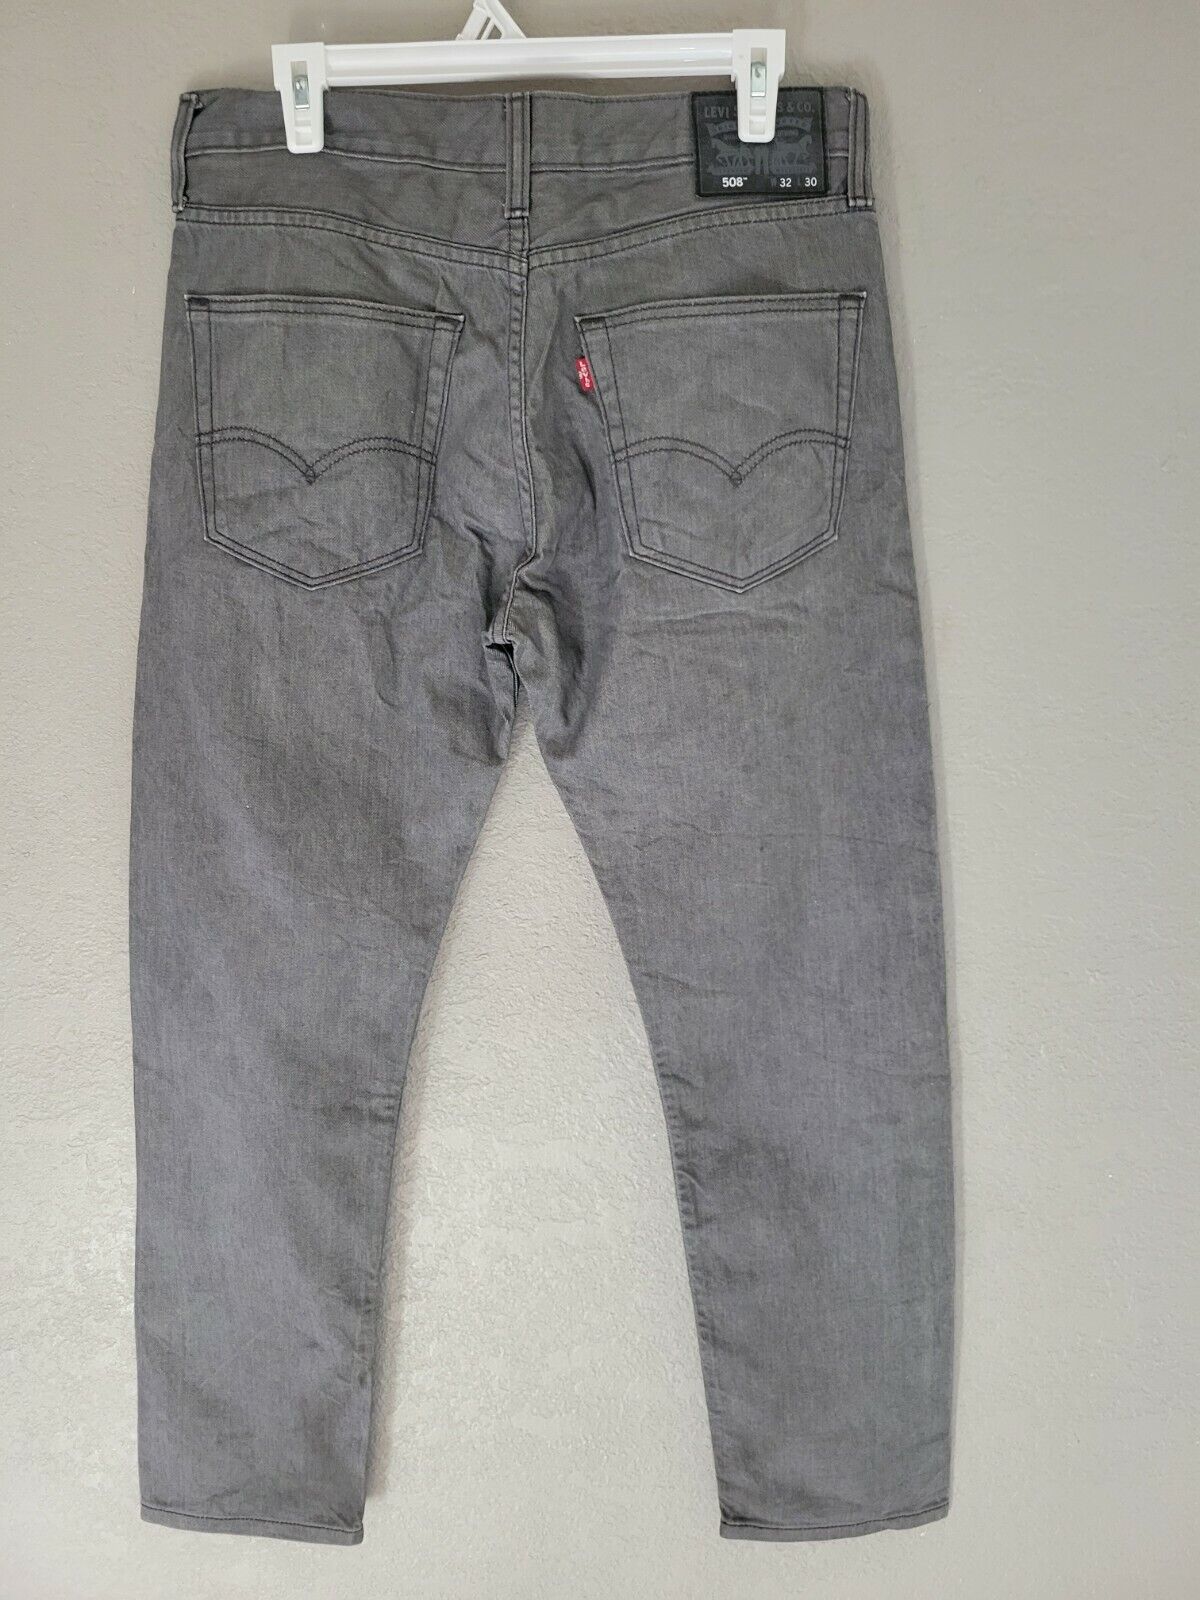 Levi's Men's 508 Regular Tapered Black 32 x 30 Denim Jeans | eBay